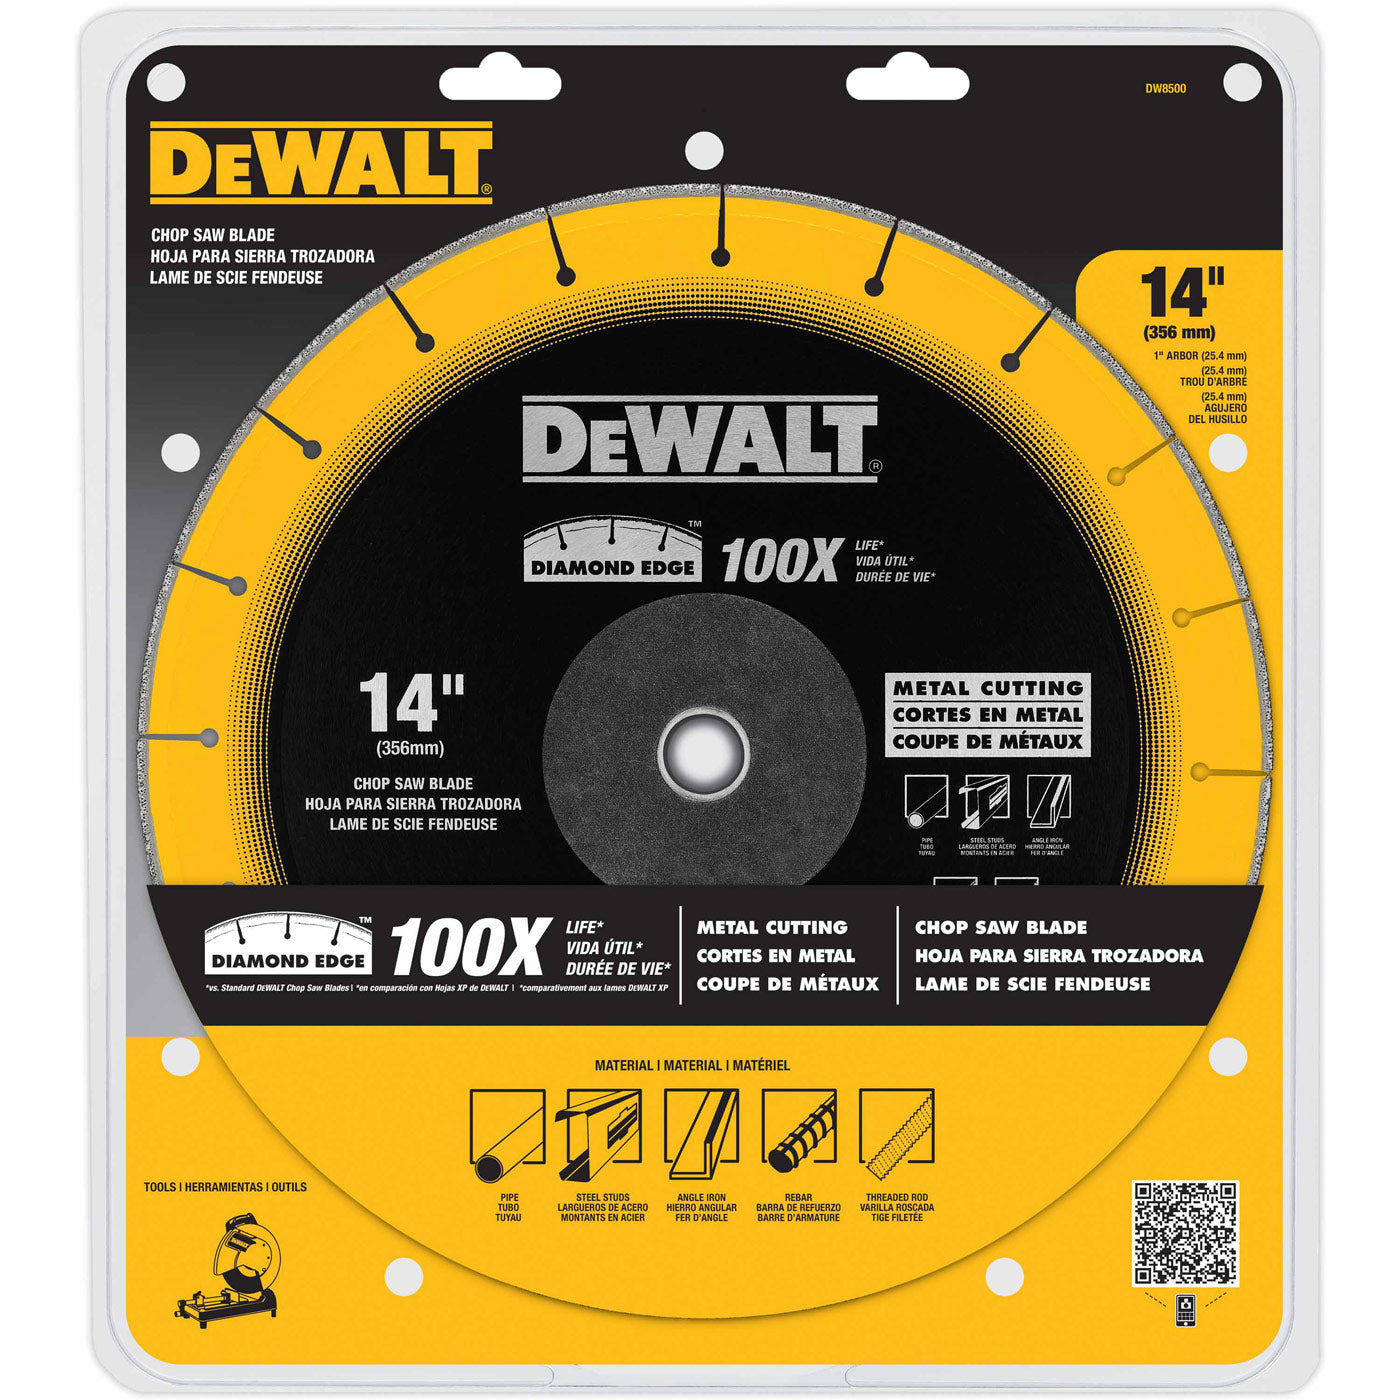 DeWalt DW8500 14'' x 1'' Diamond Edge Chop Saw Blade